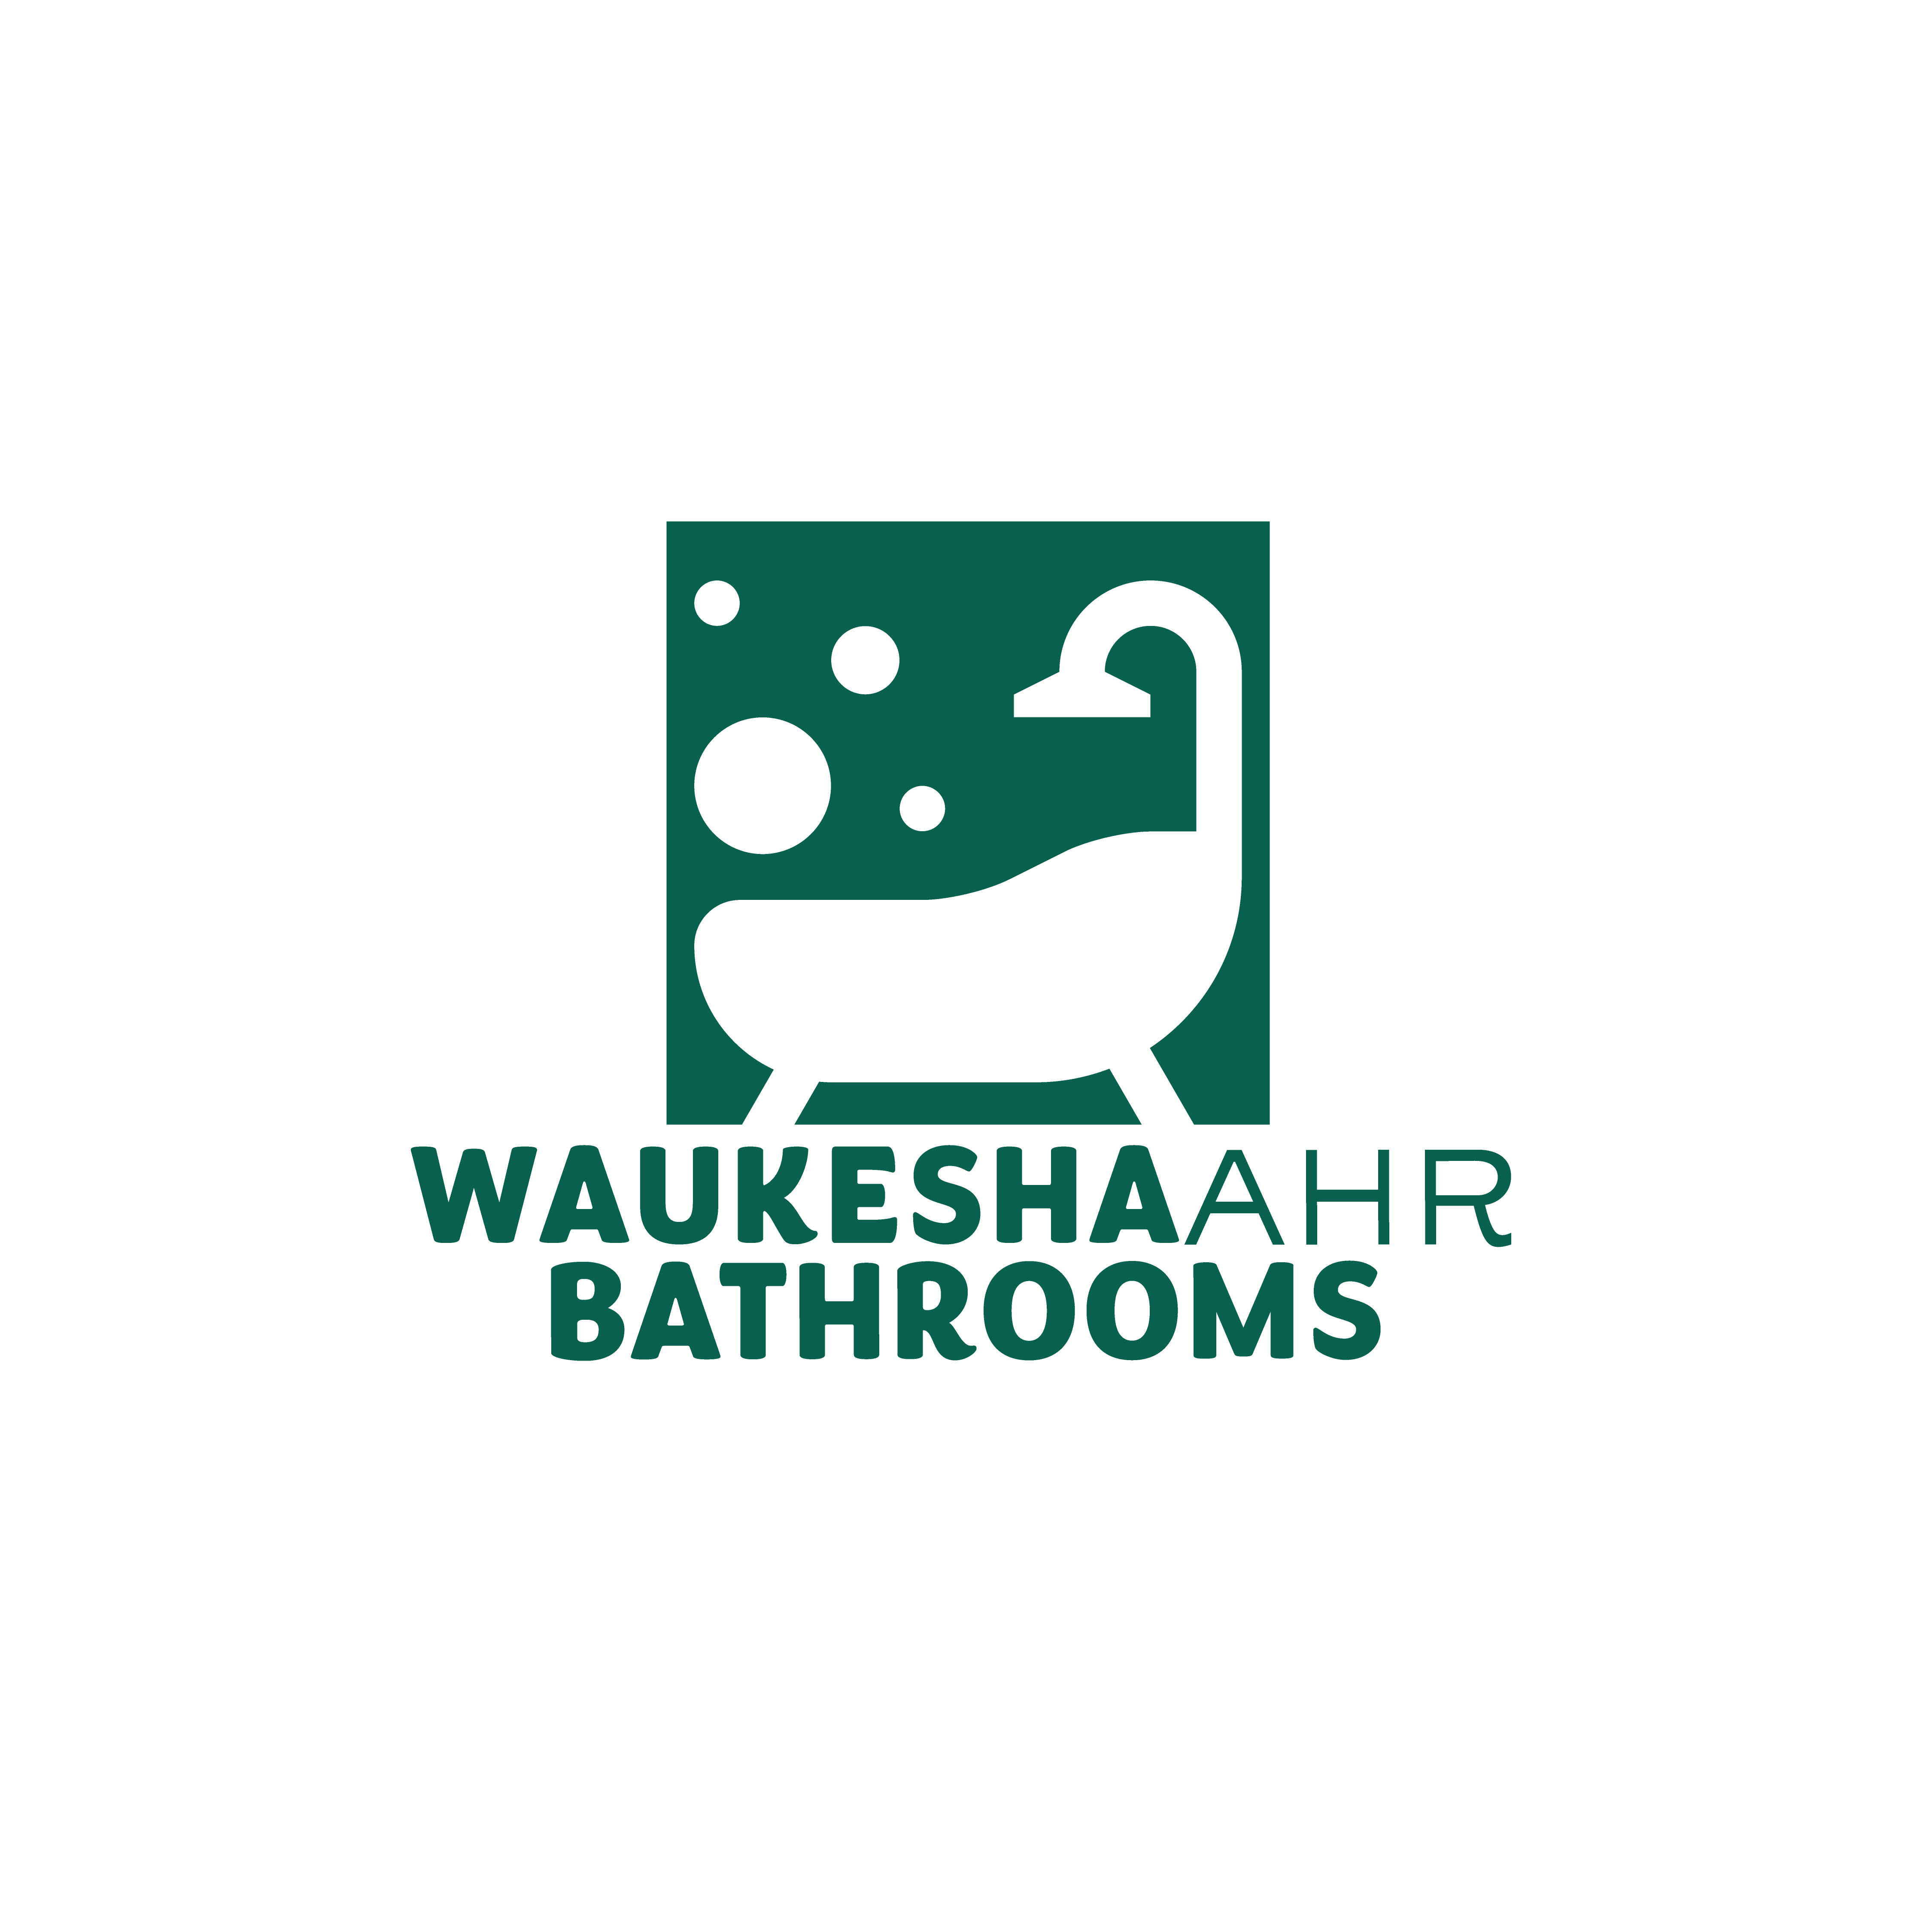 Waukesha Bathrooms by AHR